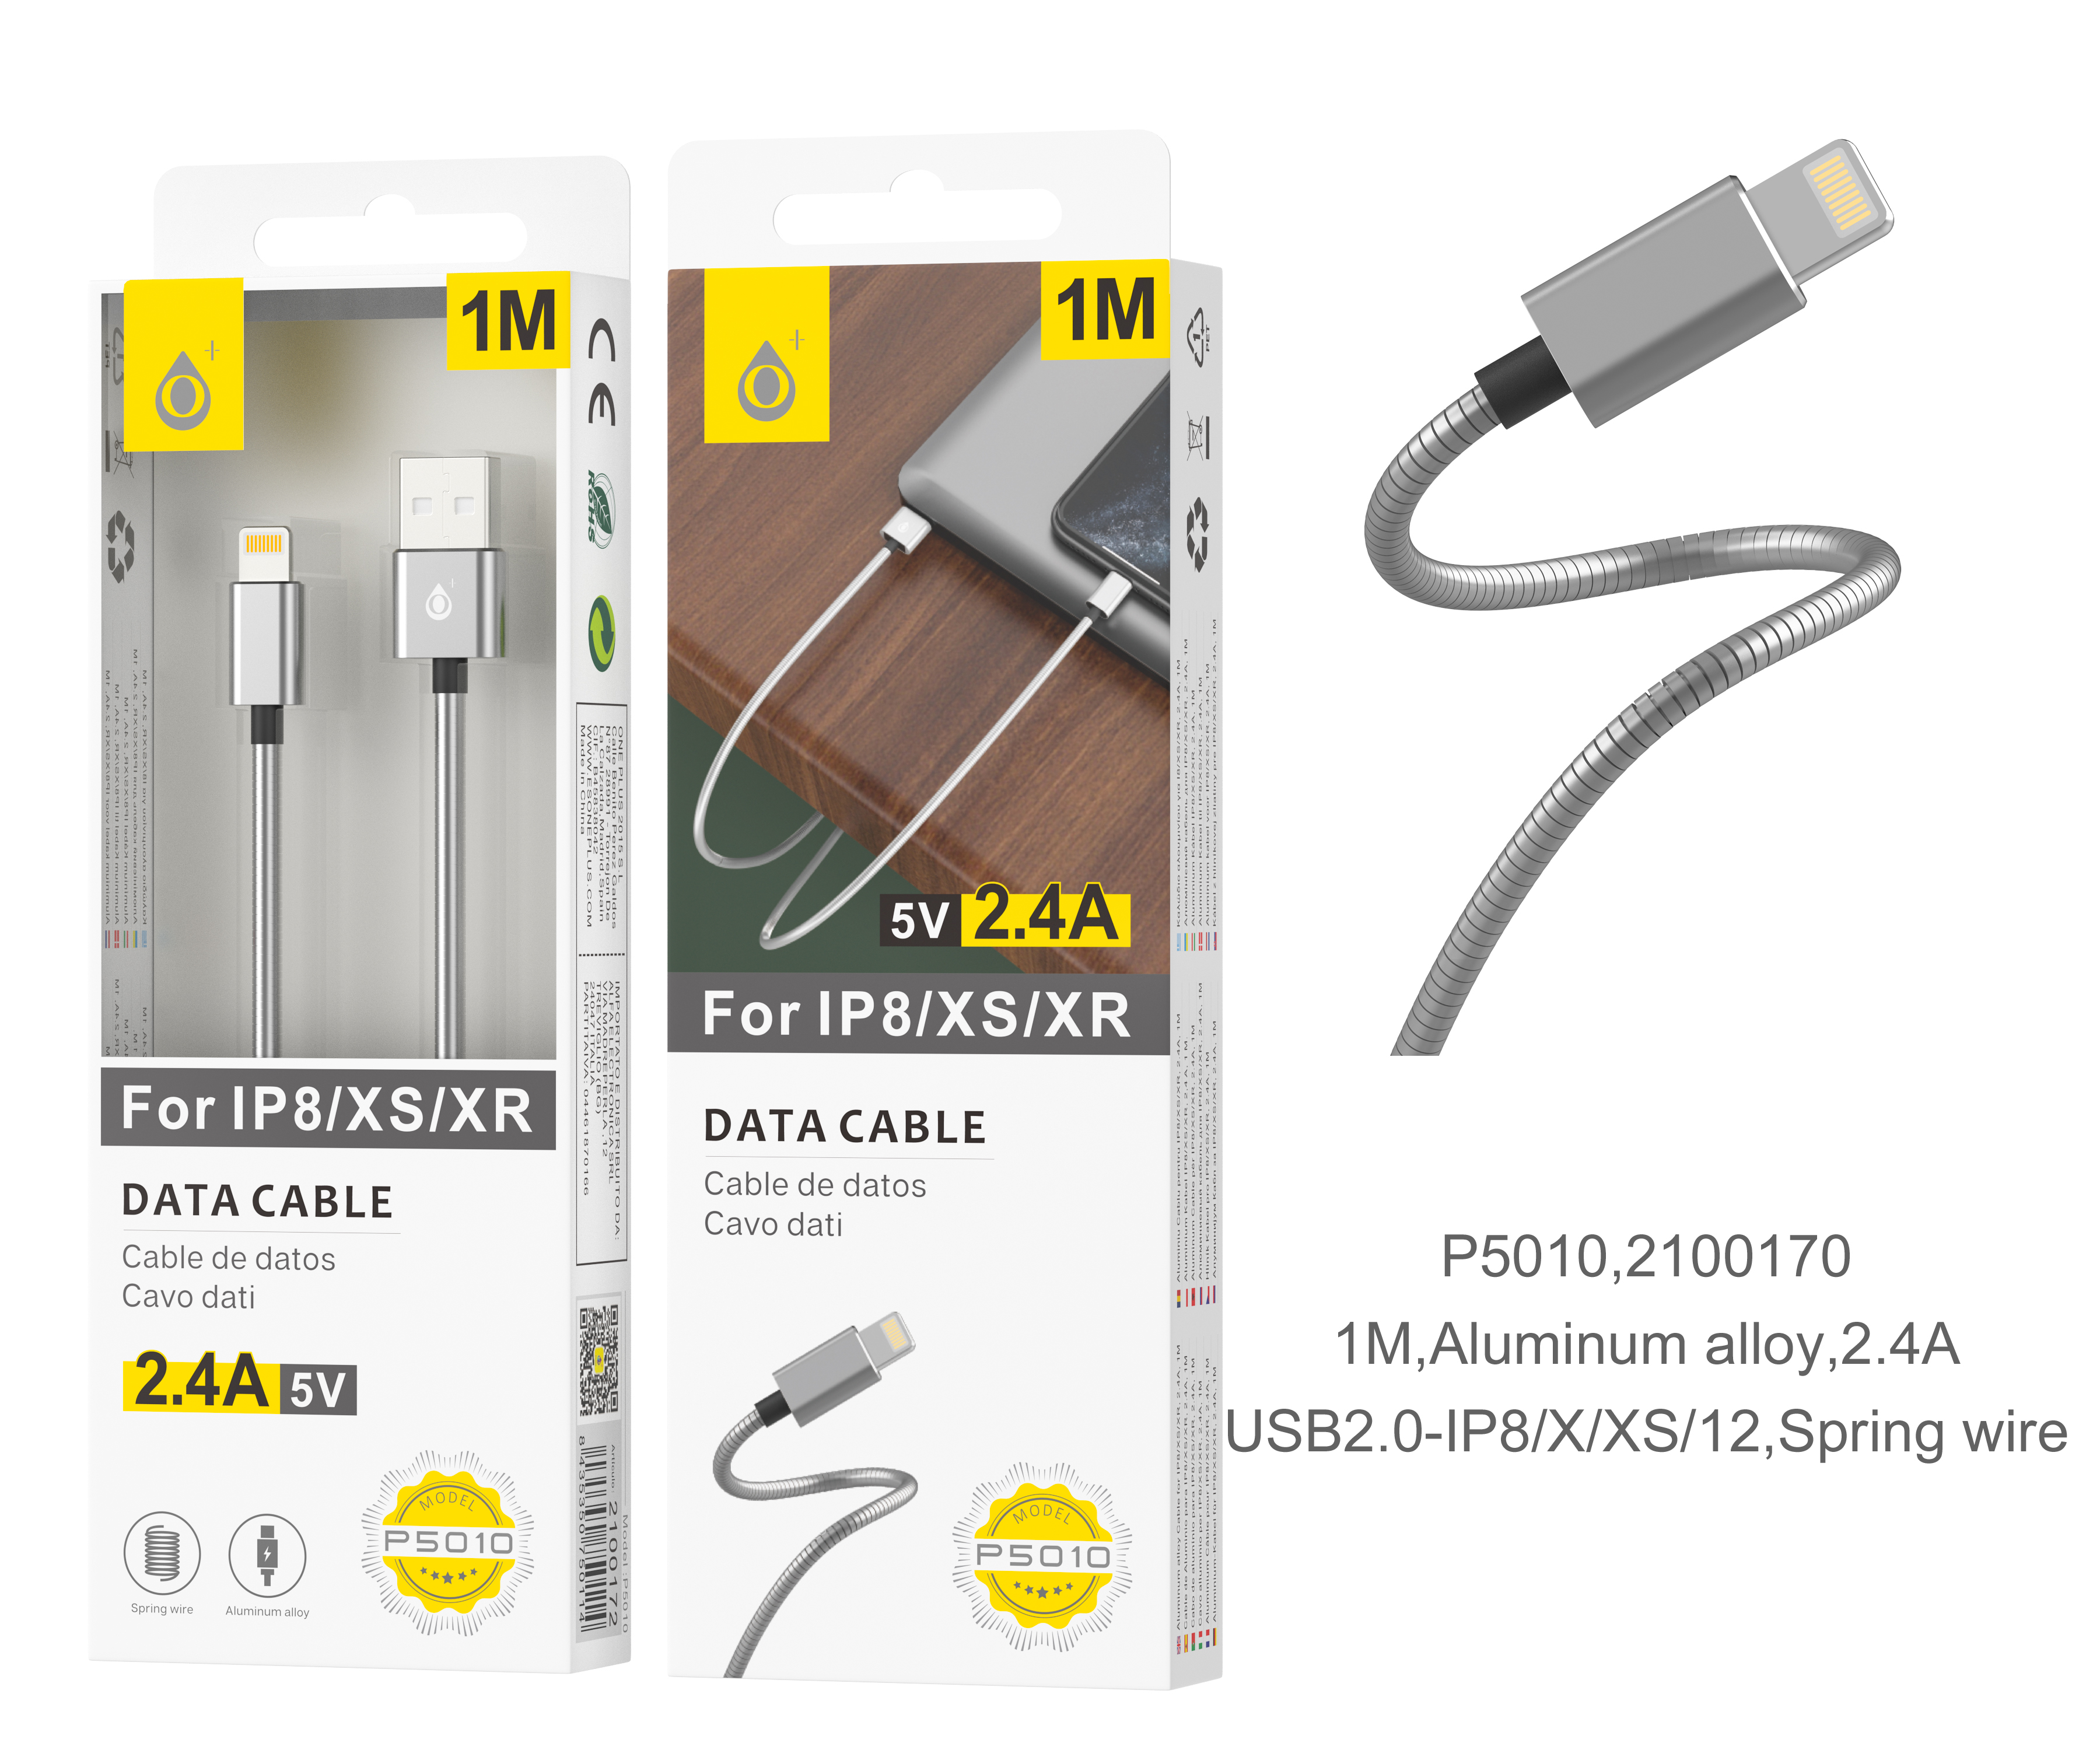 P5010 PL Cable de dato Merga Metalico para Iphone5/6/7 Plata, 2A, 1M